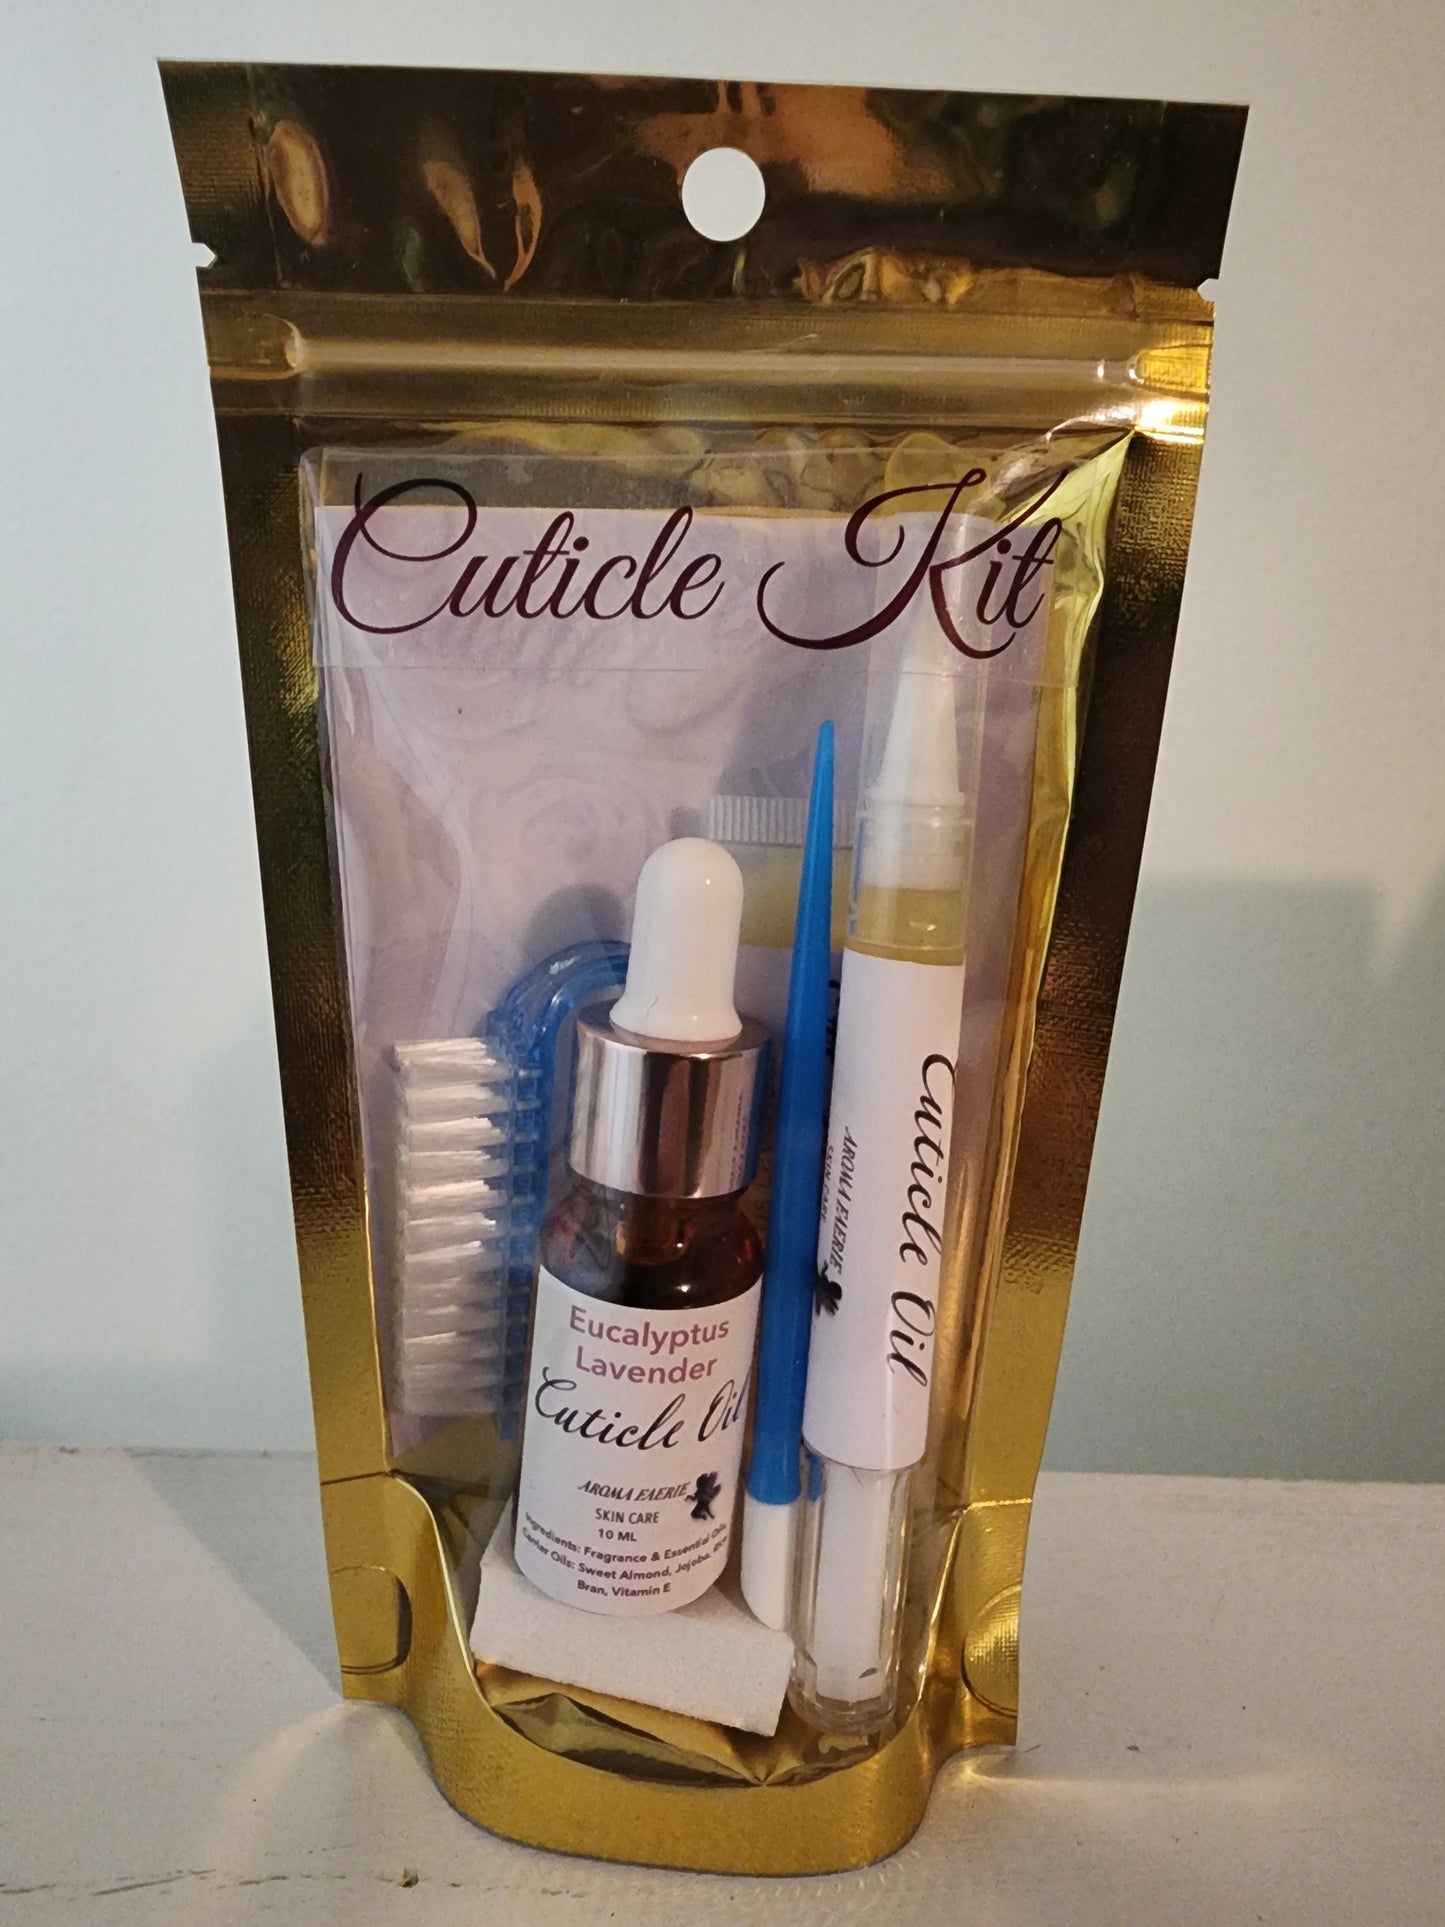 Cuticle Kit